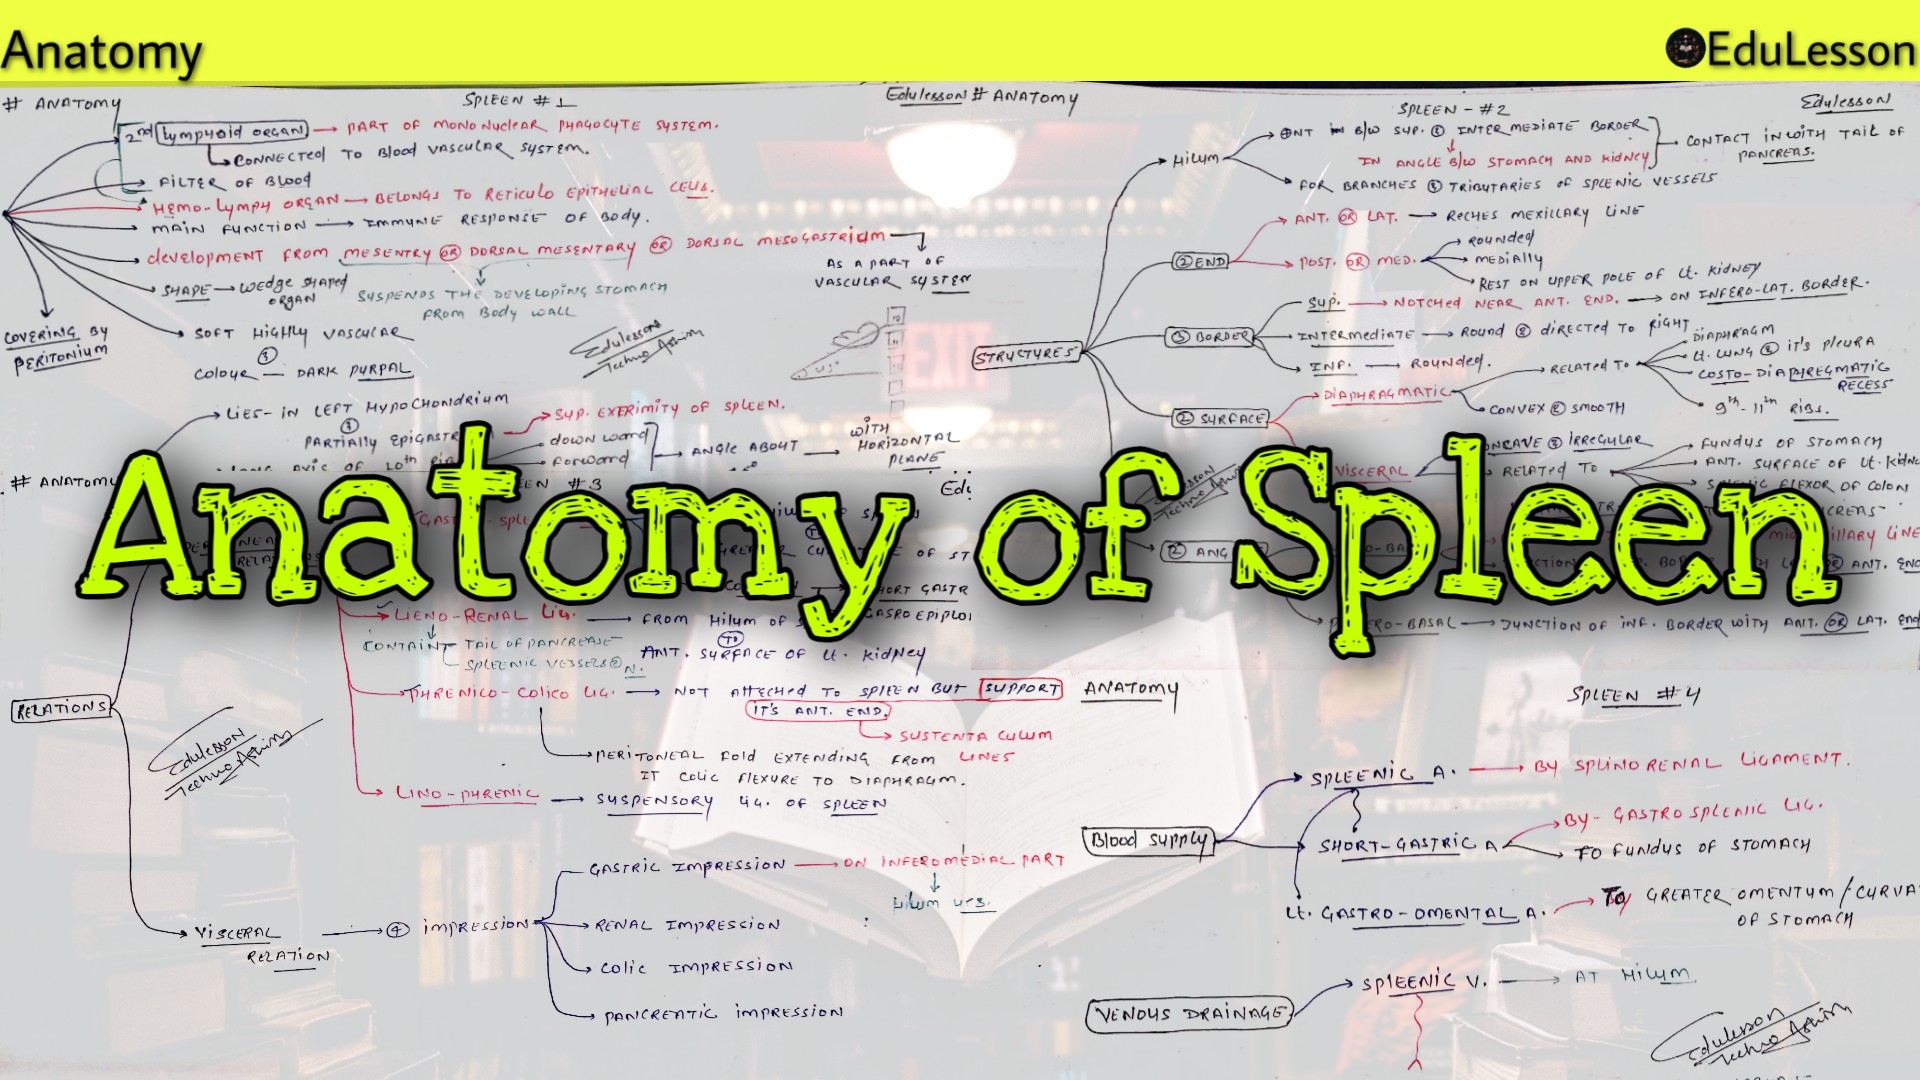 Anatomy of Spleen - Location, Shape, Structure, Relations & Vasculature